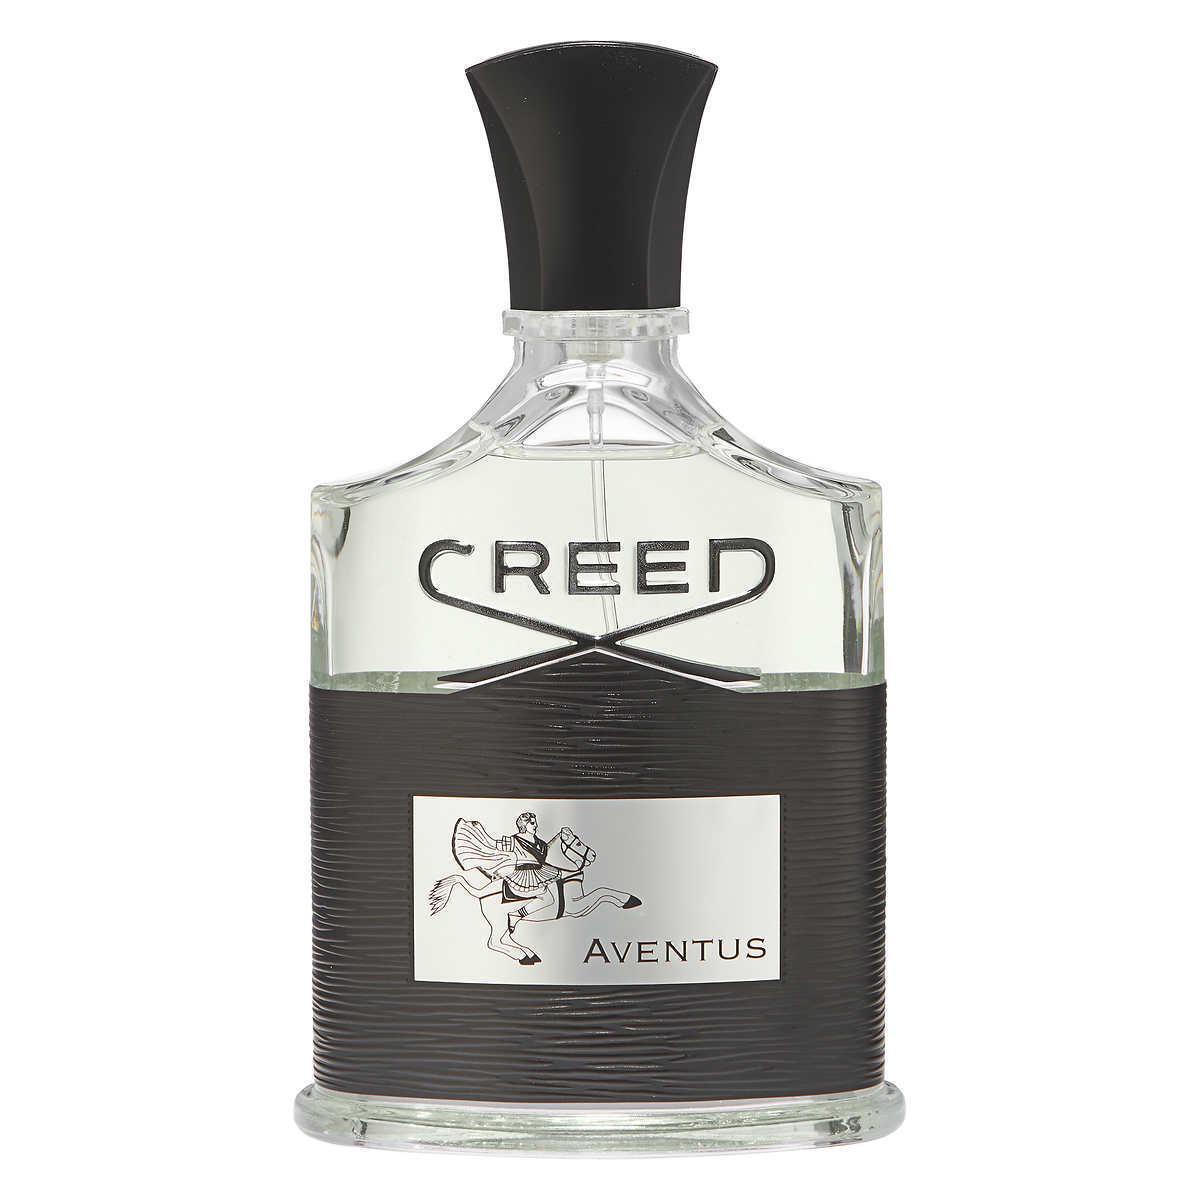 Creed Aventus 3.3 oz / 100ml Metal Cap